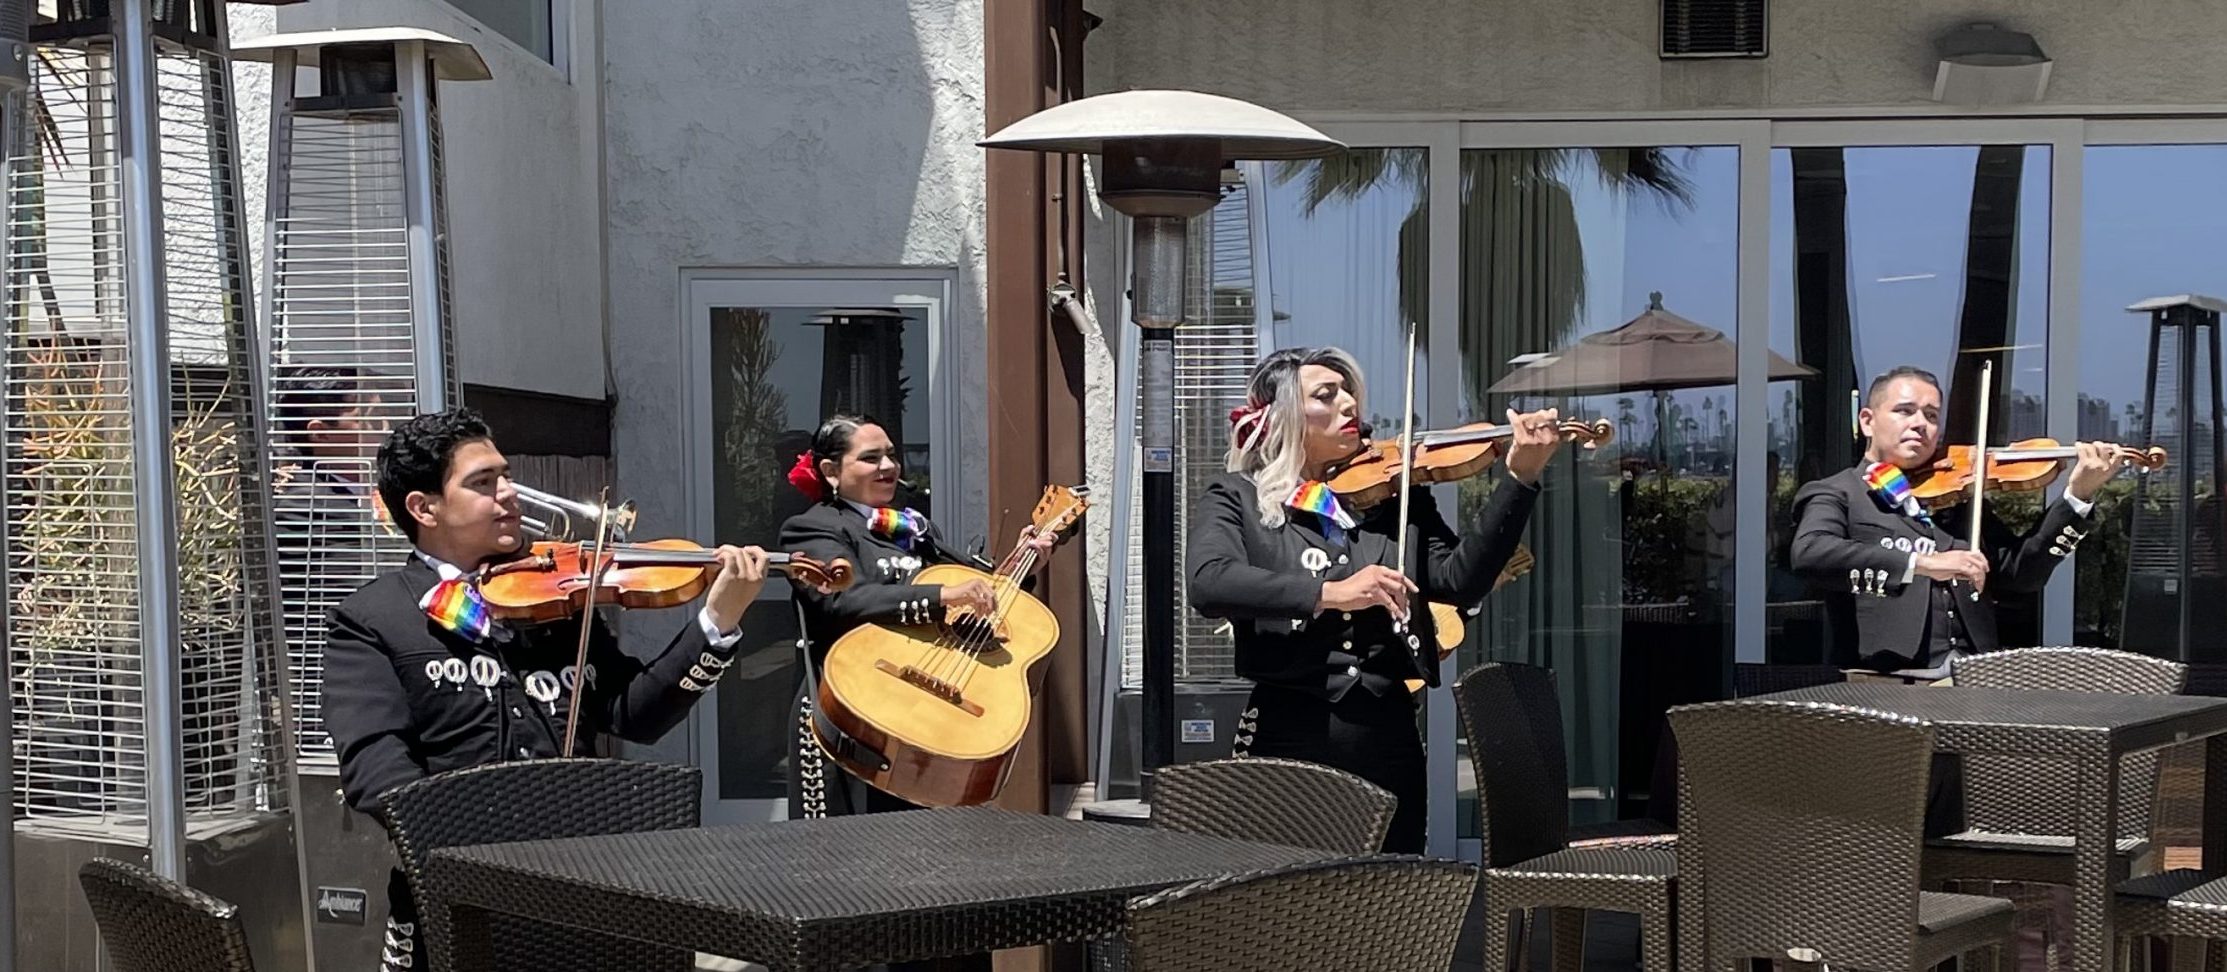 World S First Lgbtq Mariachi Band Performs At Long Beach Restaurant Fuego Long Beach California Eminetra